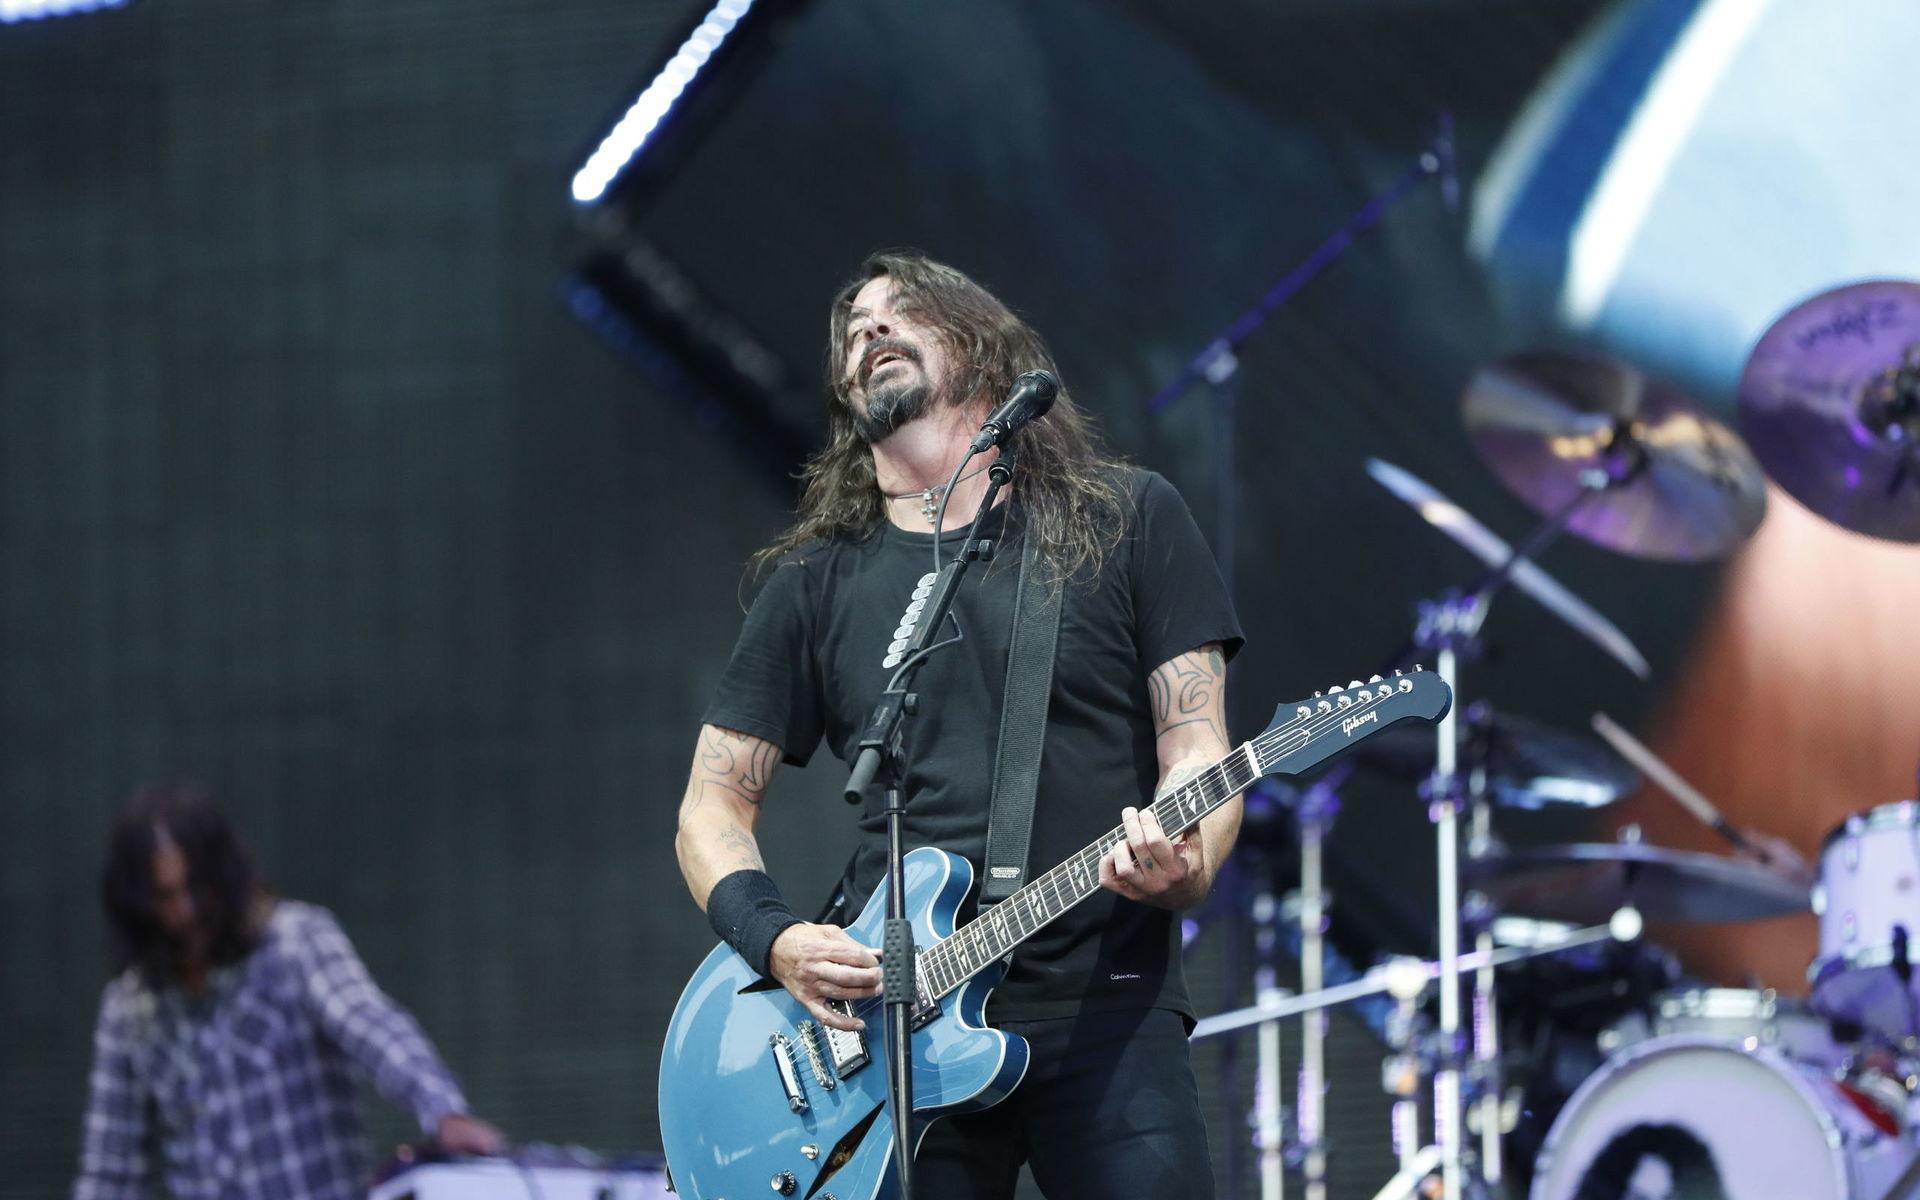 Dave Grohl - frontfigur och sångare i Foo Fighters.